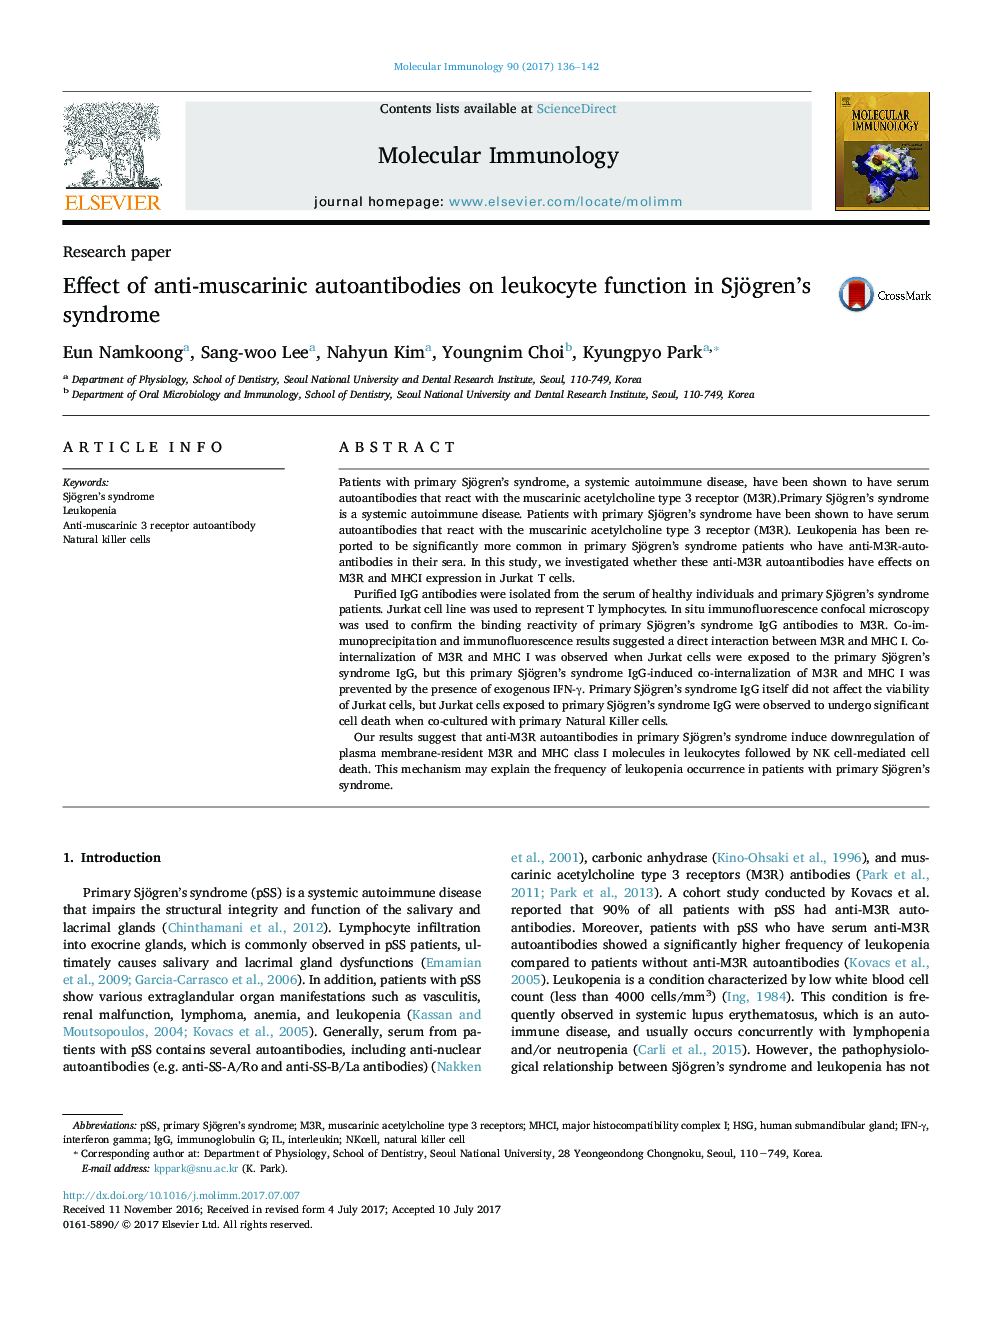 Effect of anti-muscarinic autoantibodies on leukocyte function in Sjögren's syndrome